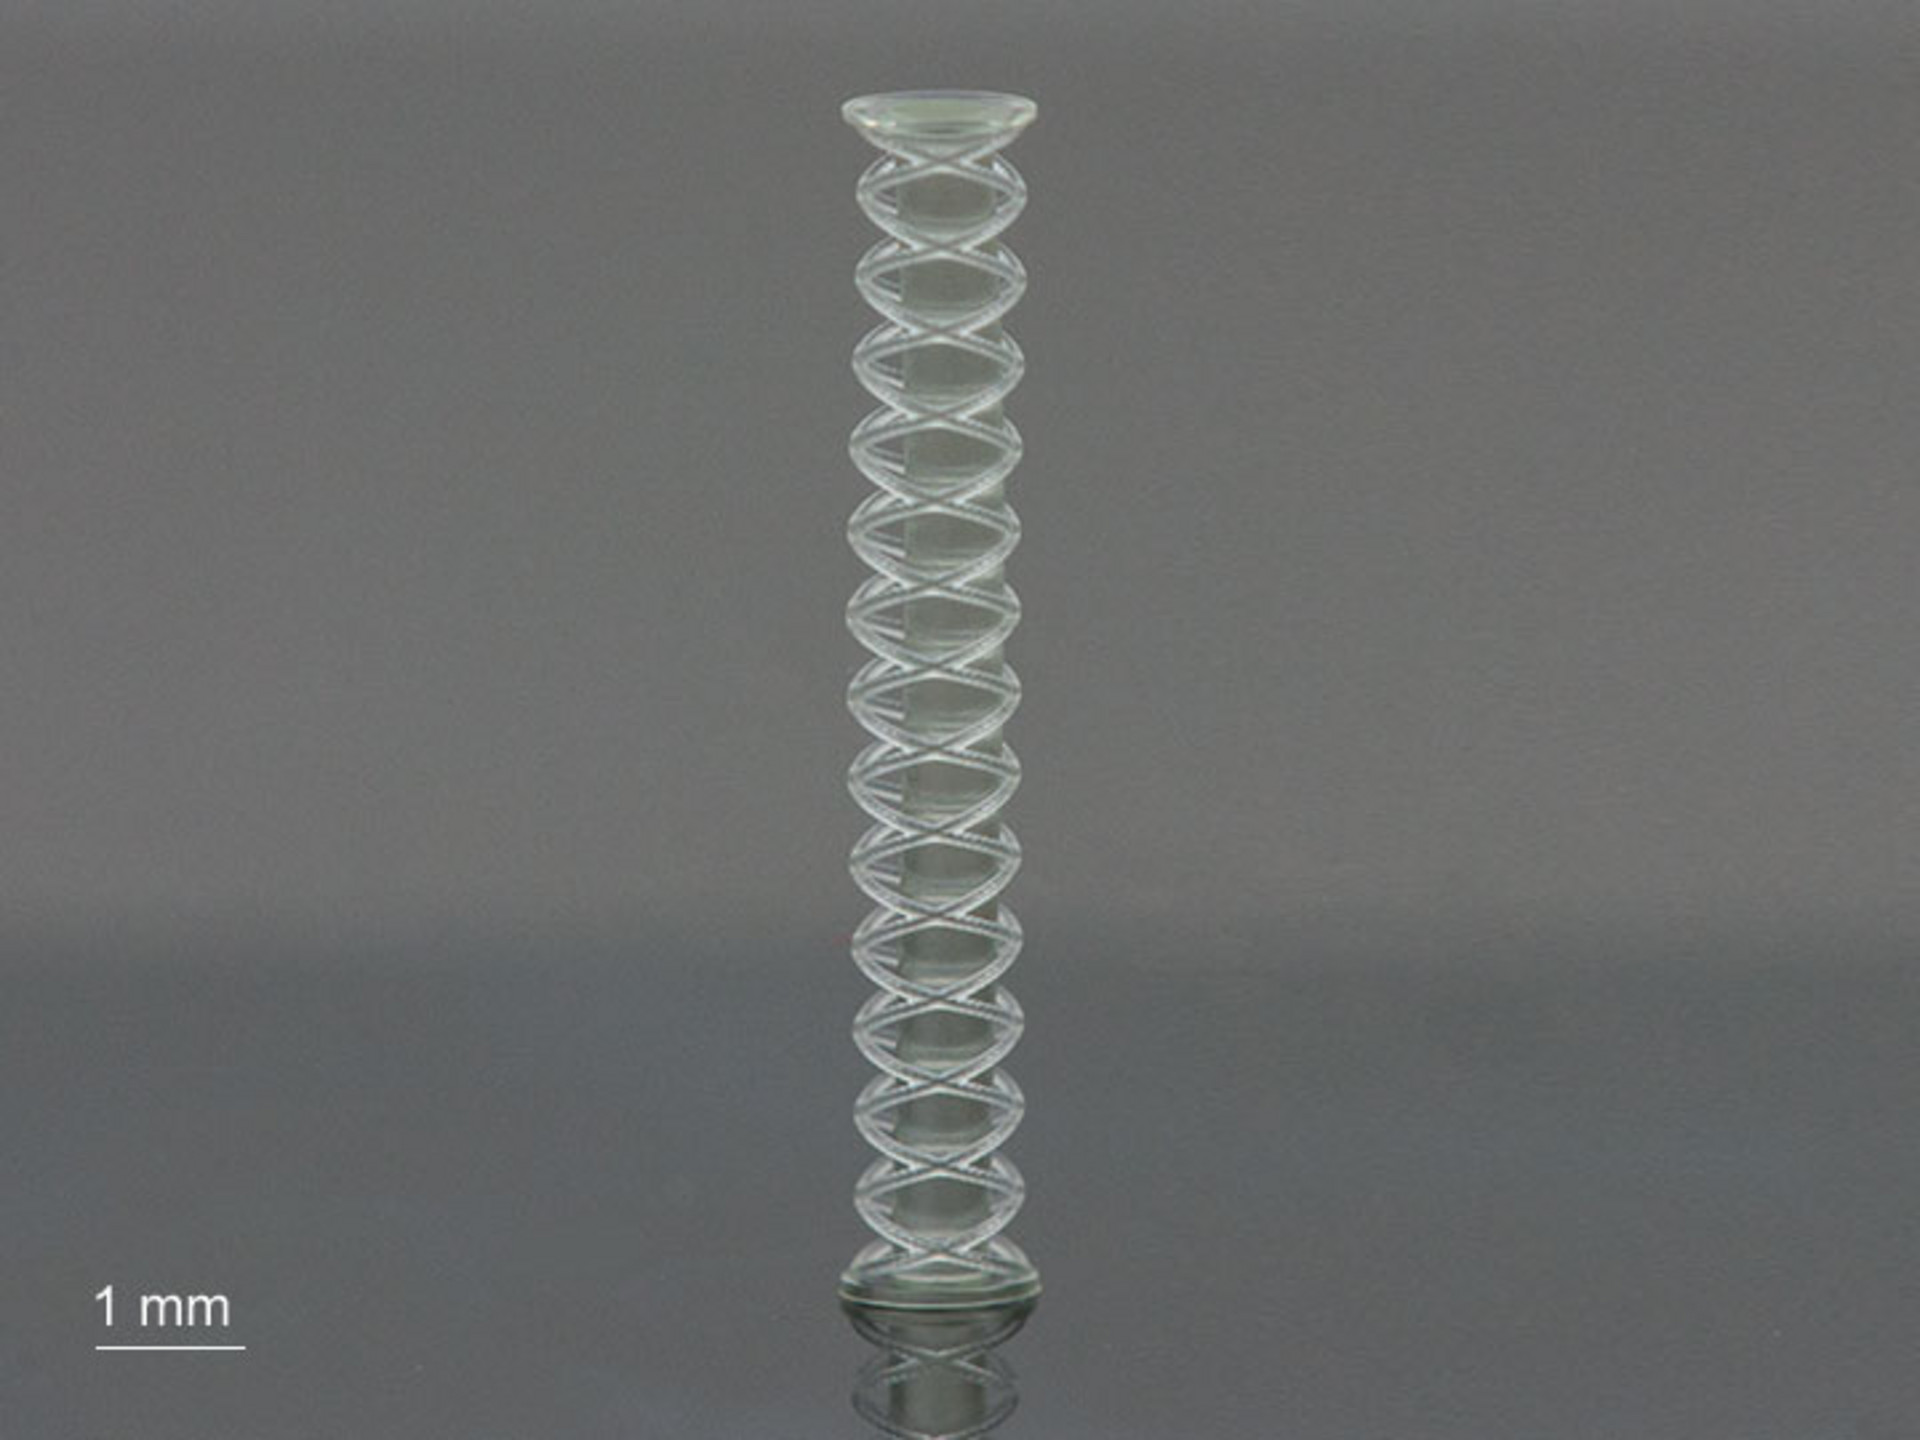 Nanoscribe millimeter-sized double helix